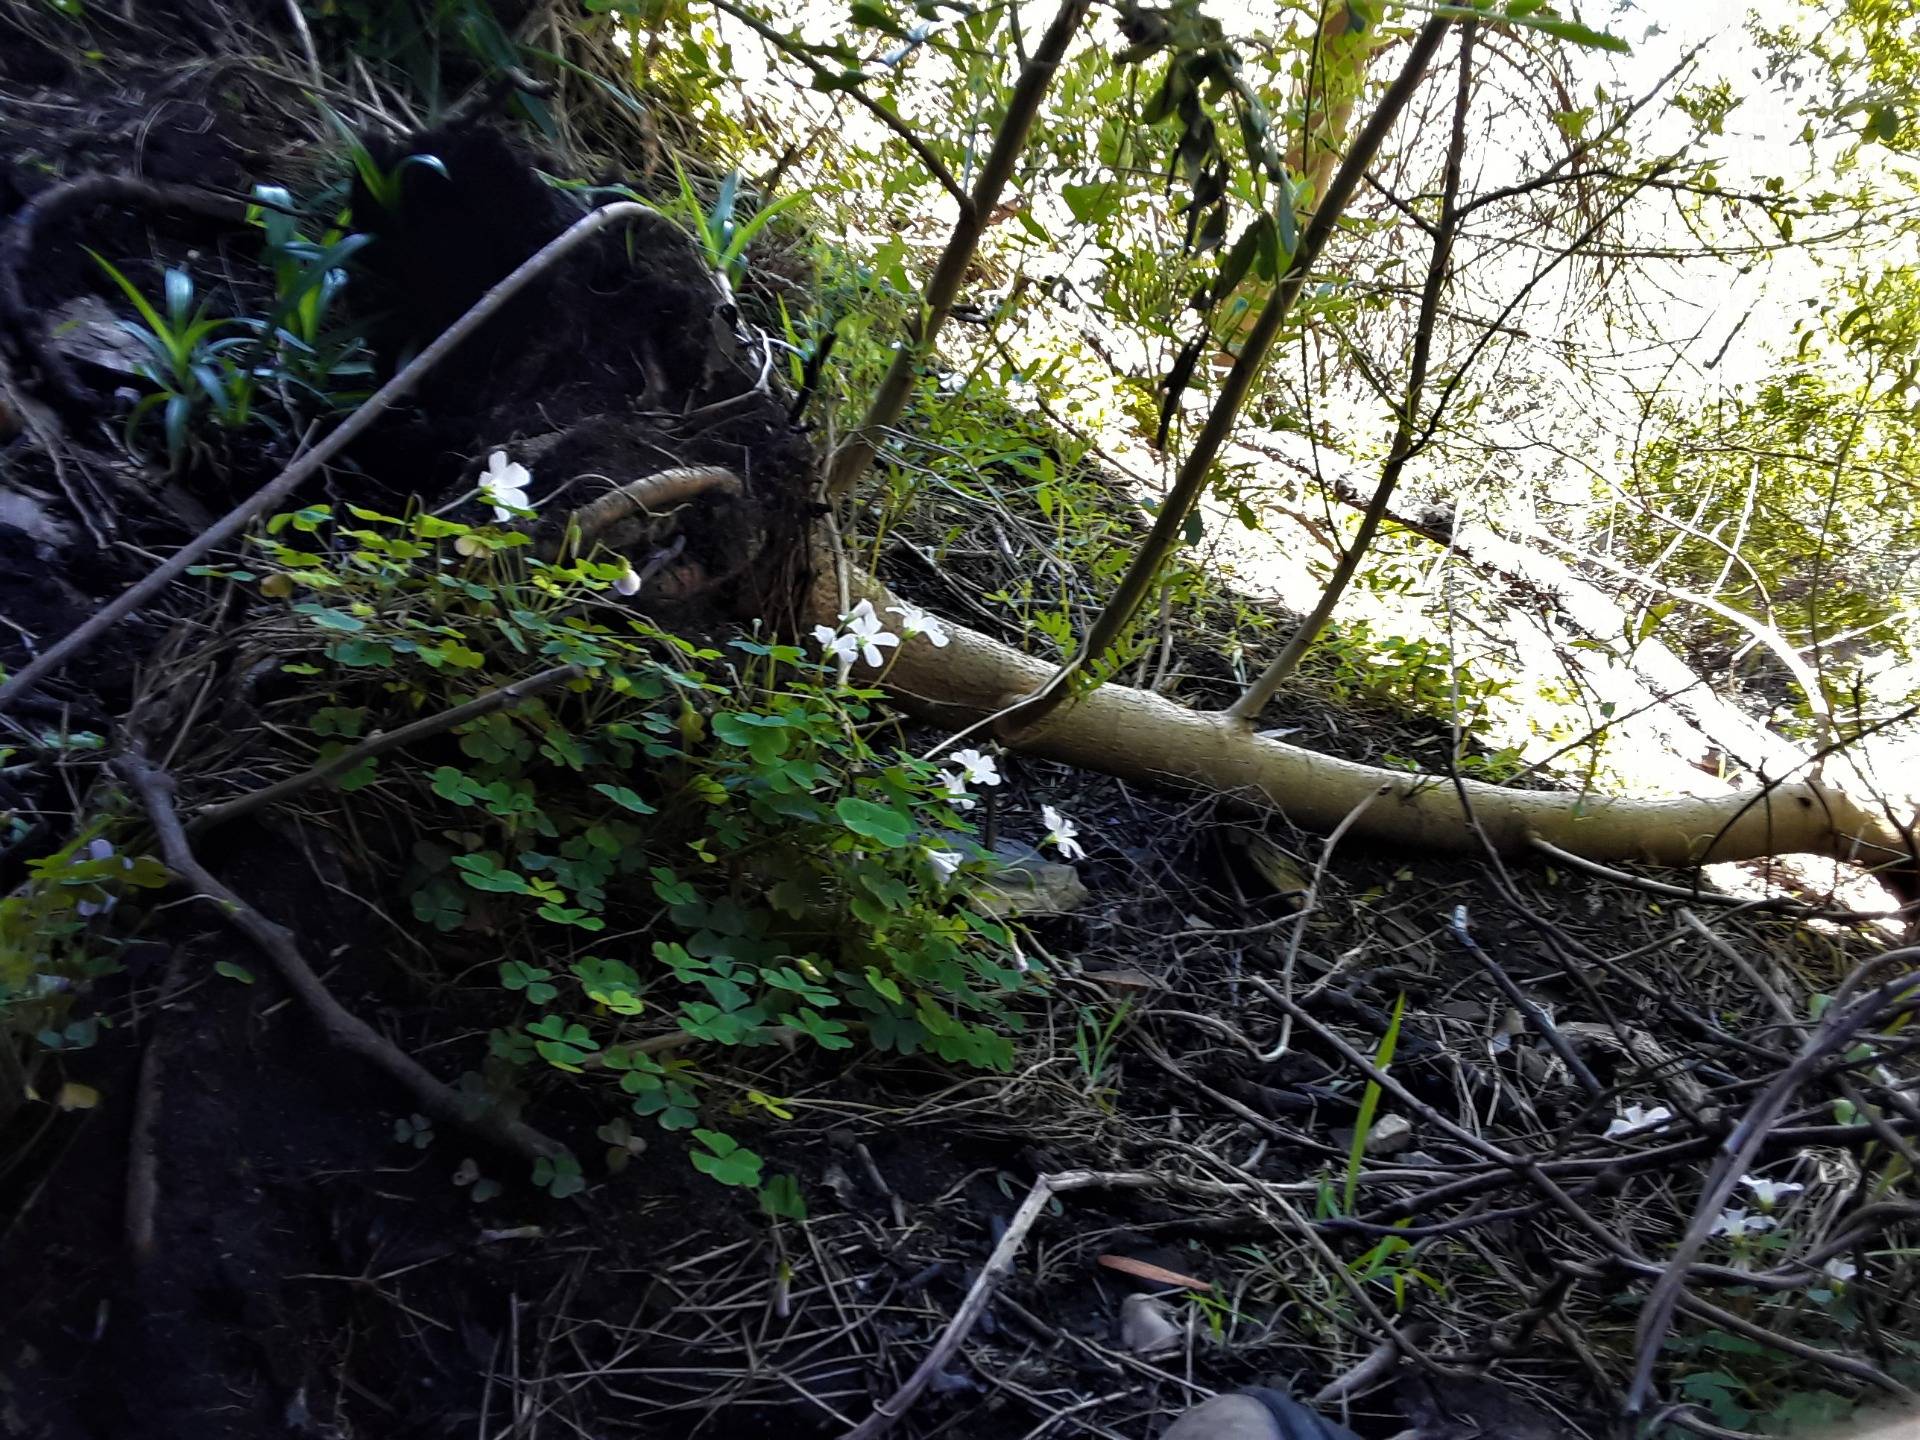 Fallen tree growing upside down on the steep slope